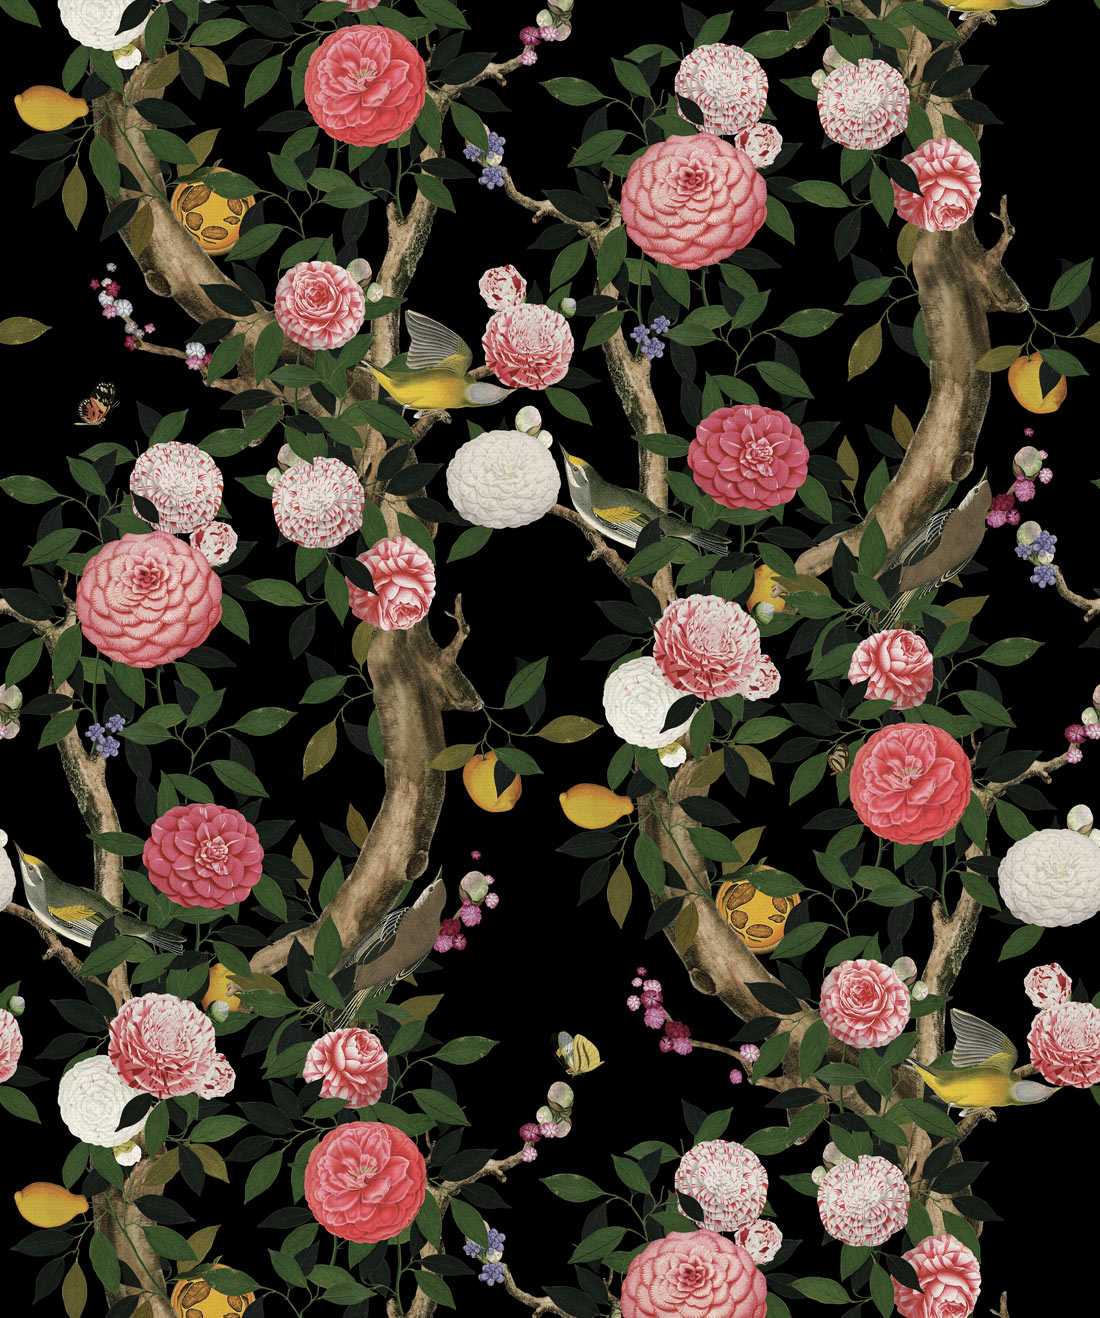 Garden Bloom Black is a stunning chinoiserie wallpaper